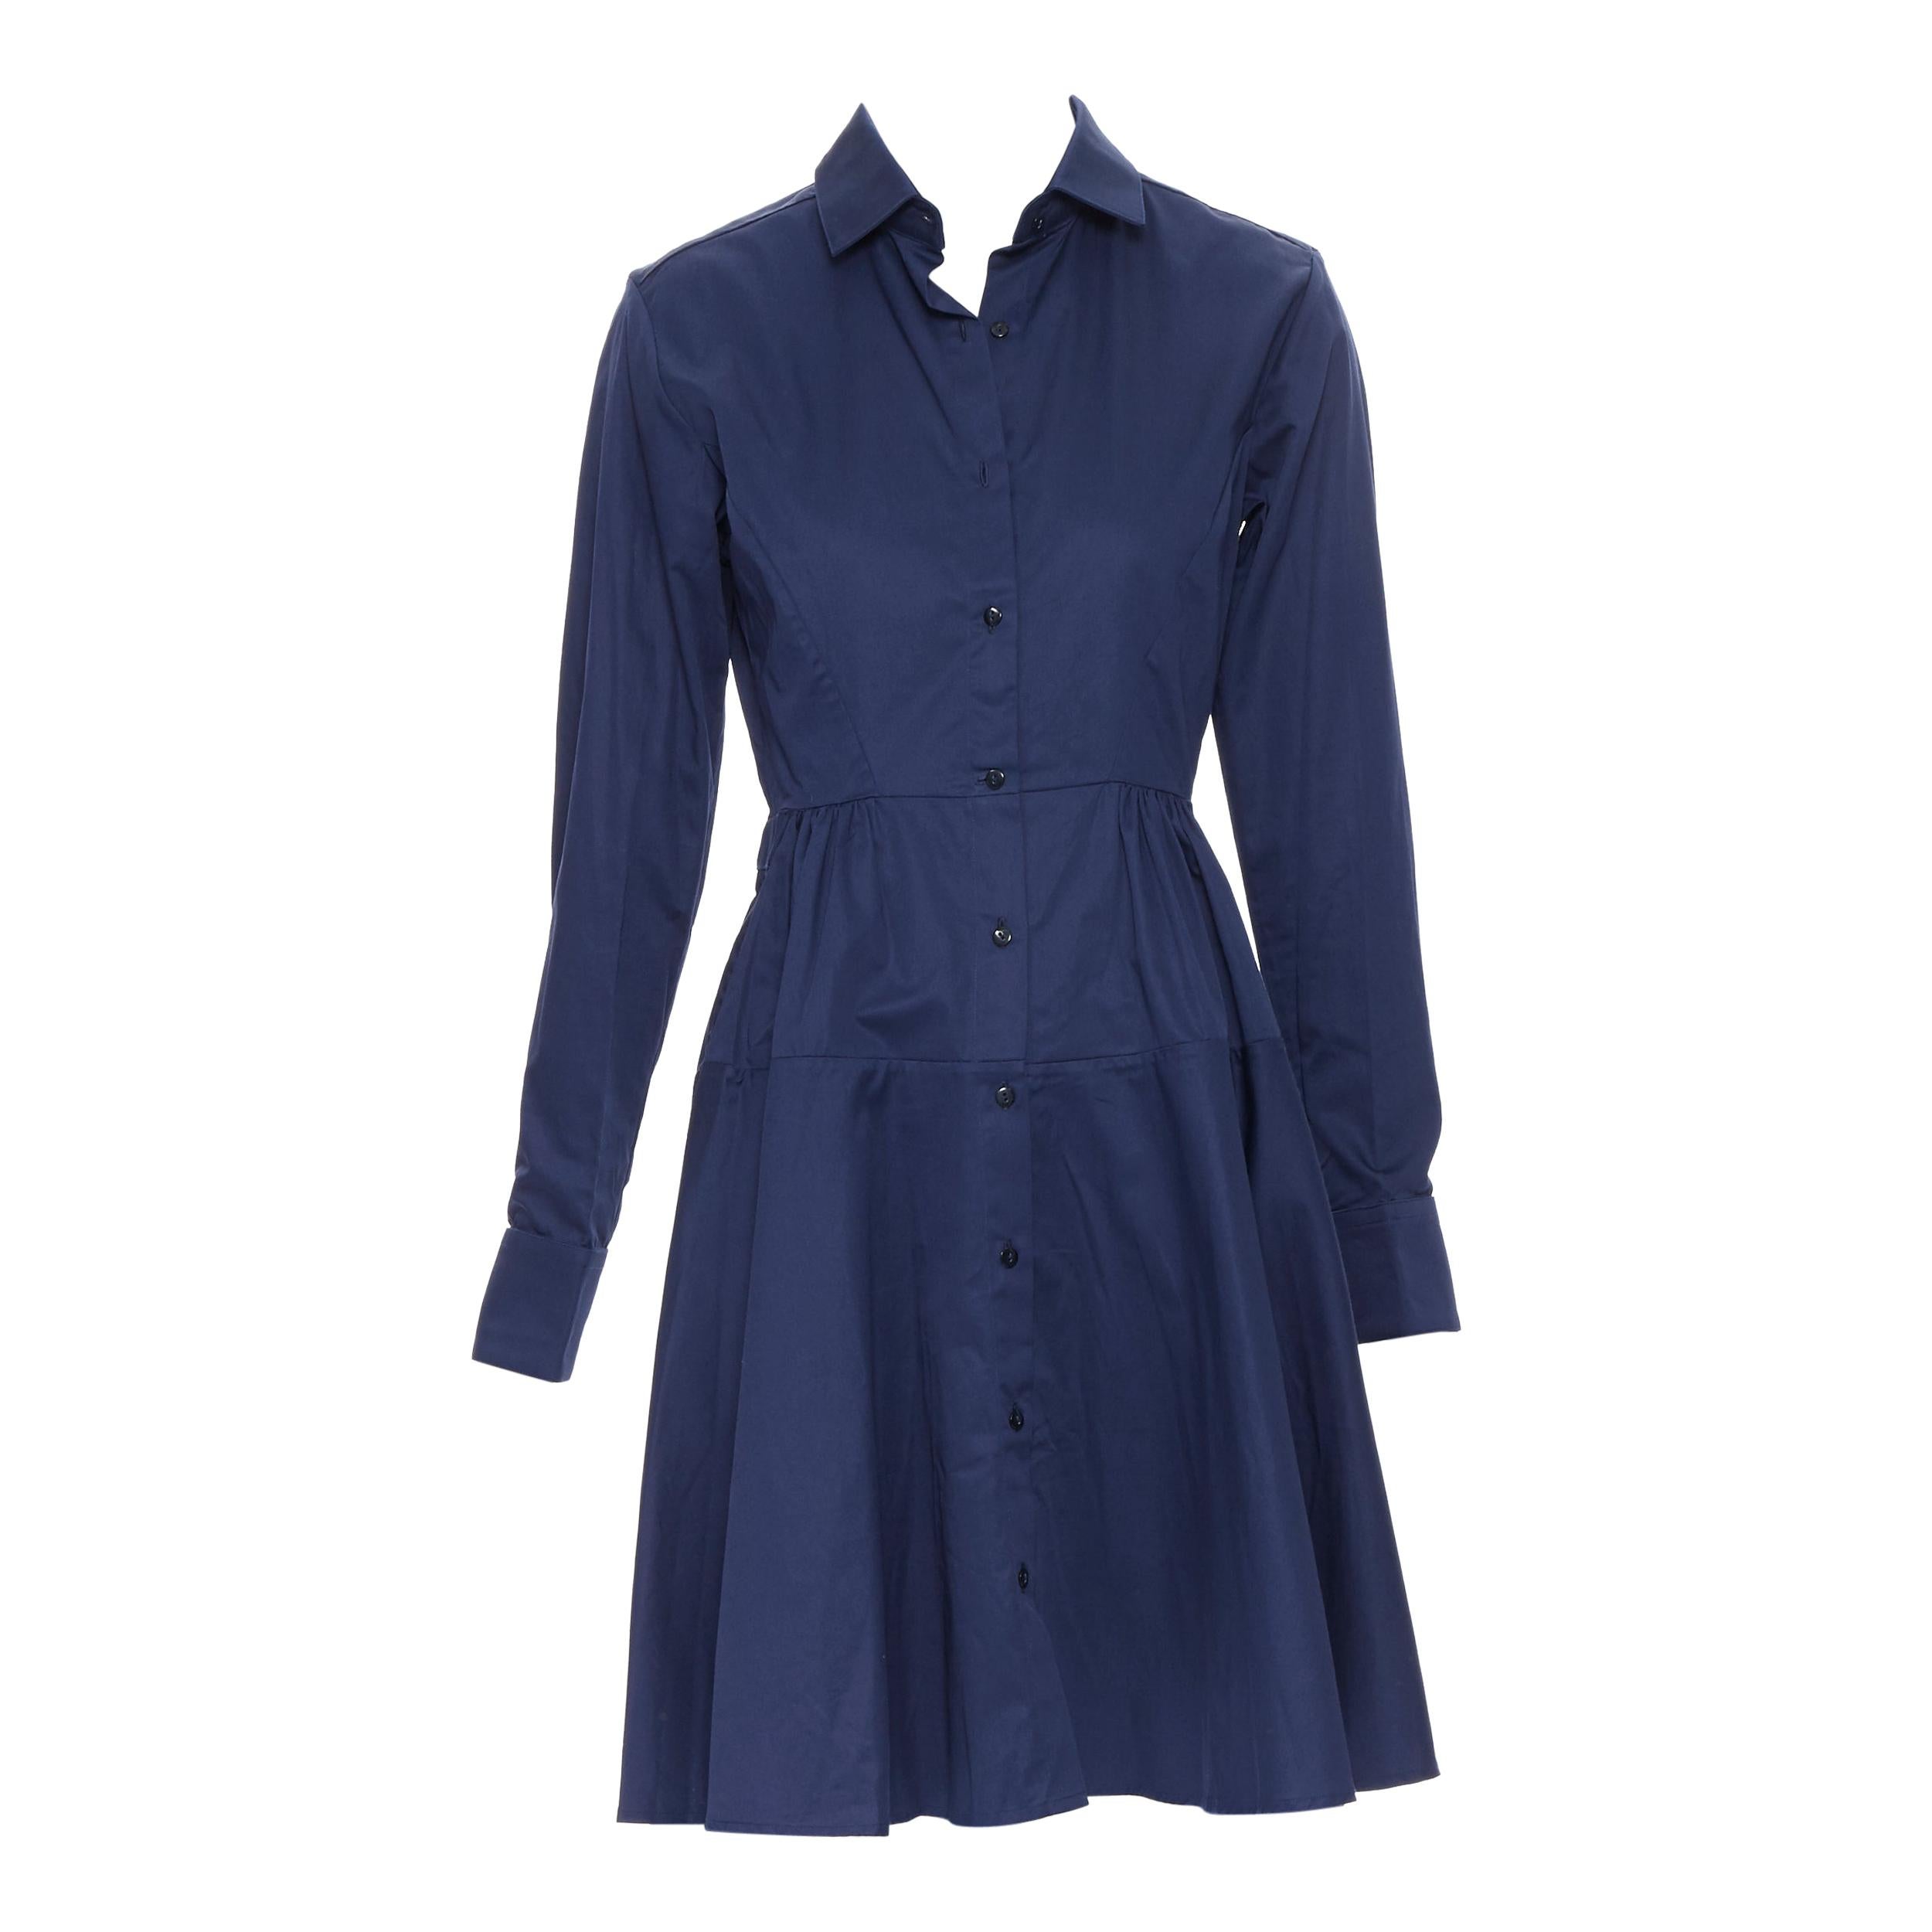 PALMER HARDING 100% cotton navy blue fit flare casual cotton dress UK8 XS